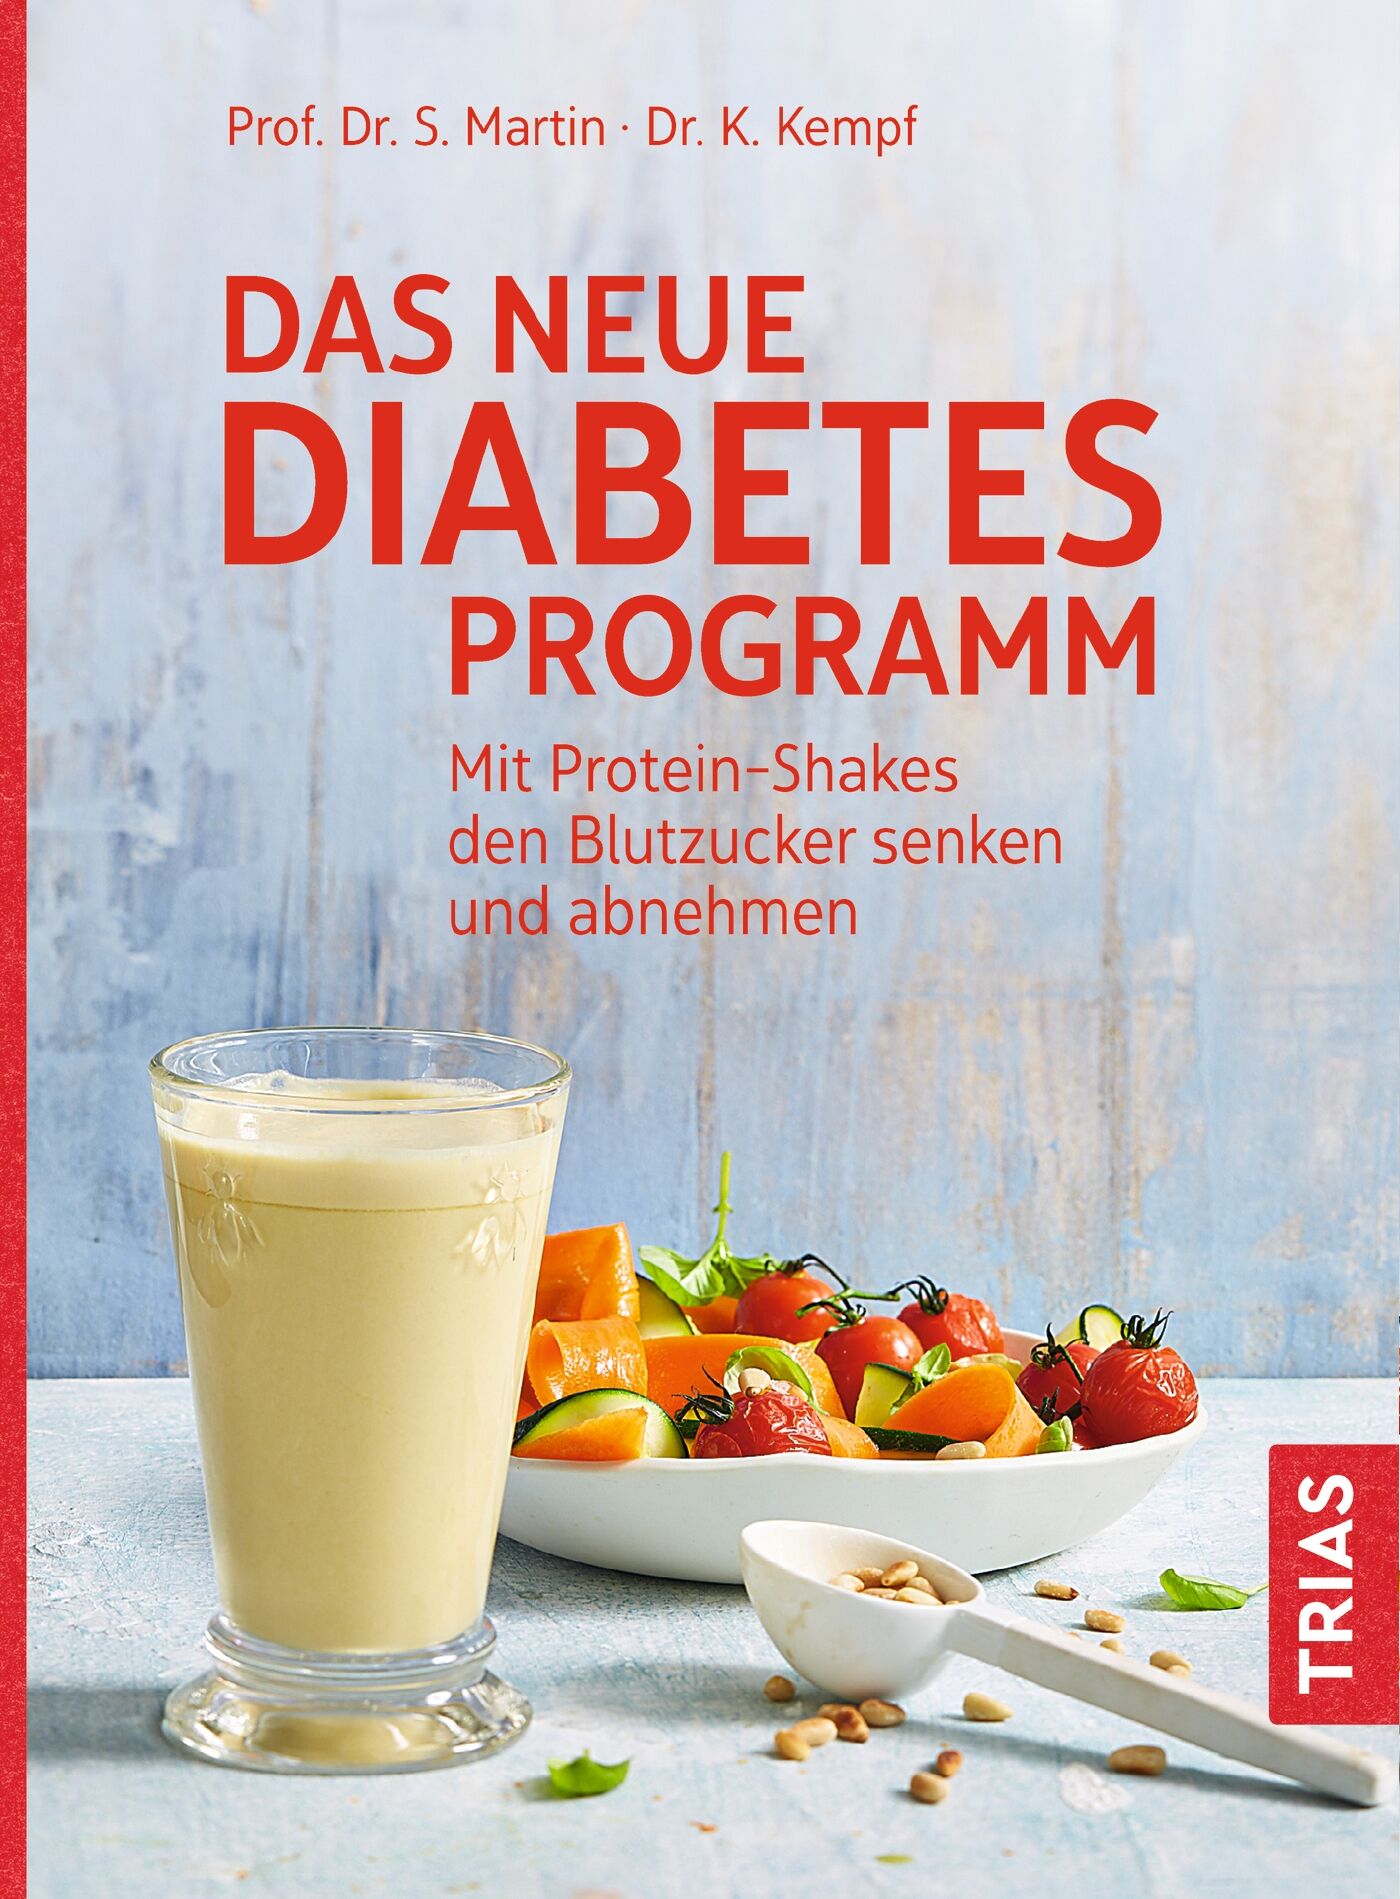 Das neue Diabetes-Programm, 9783432110400